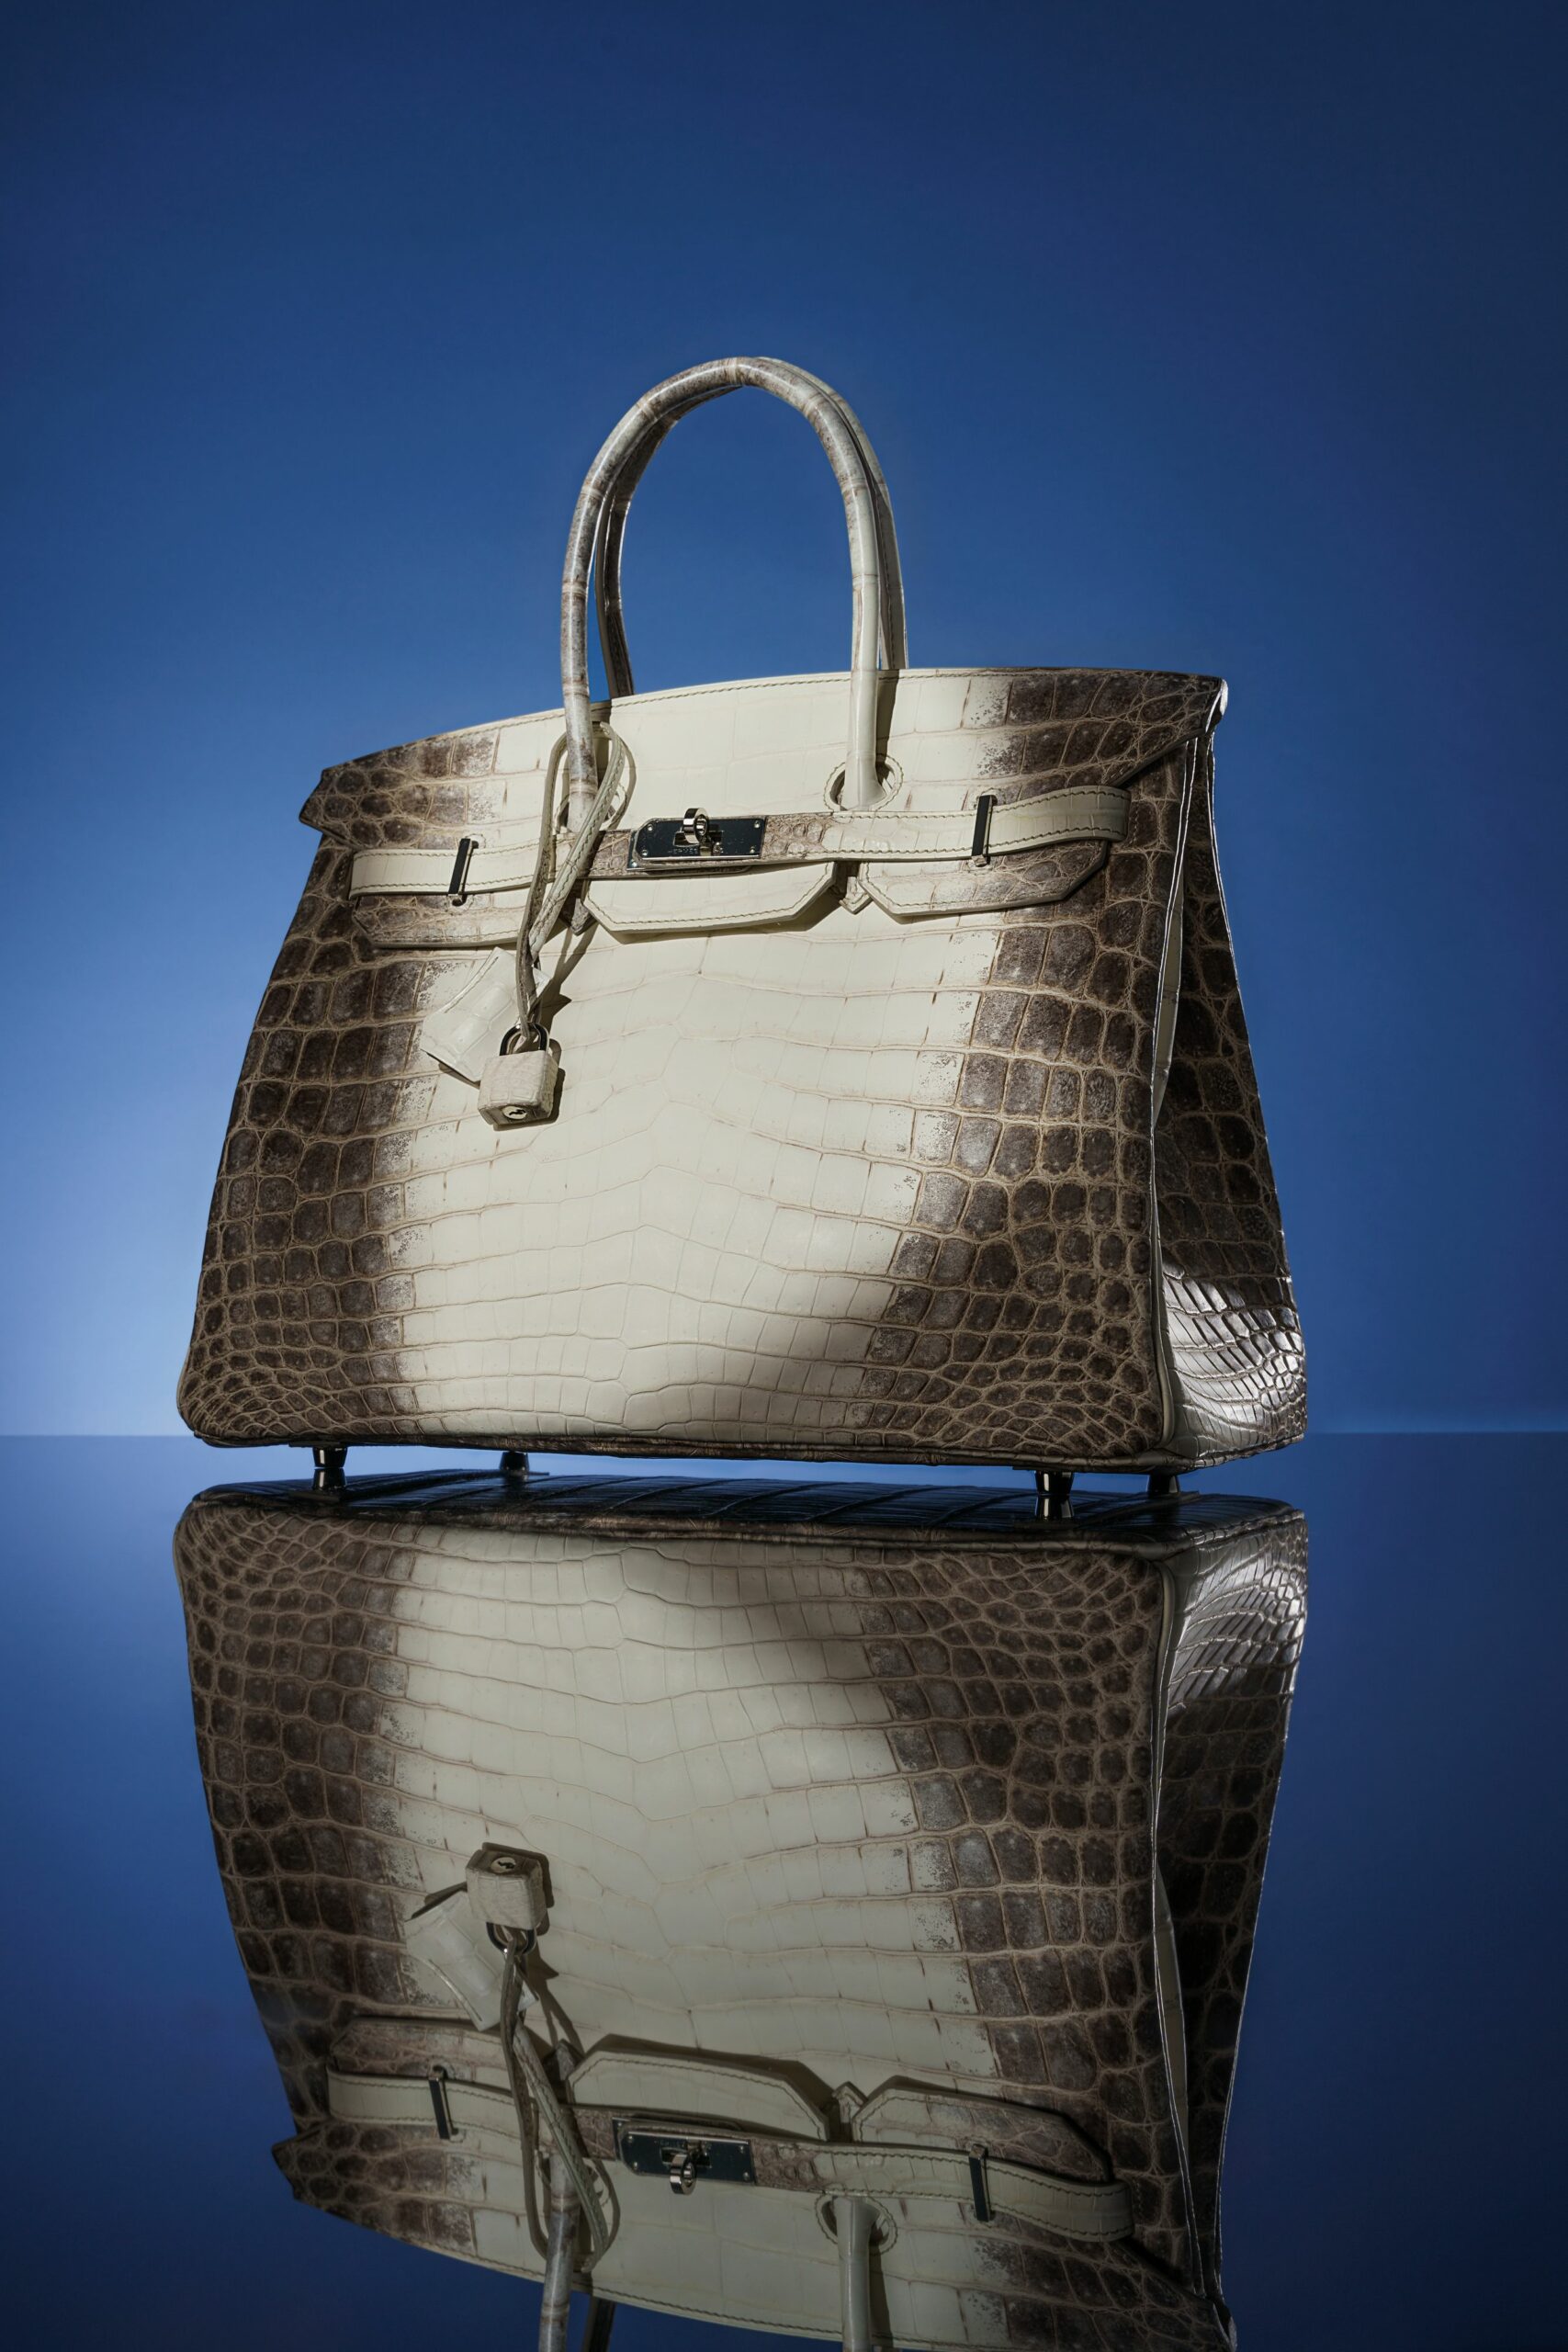 Rare Hermès handbags come up for auction in Amsterdam - DutchNews.nl